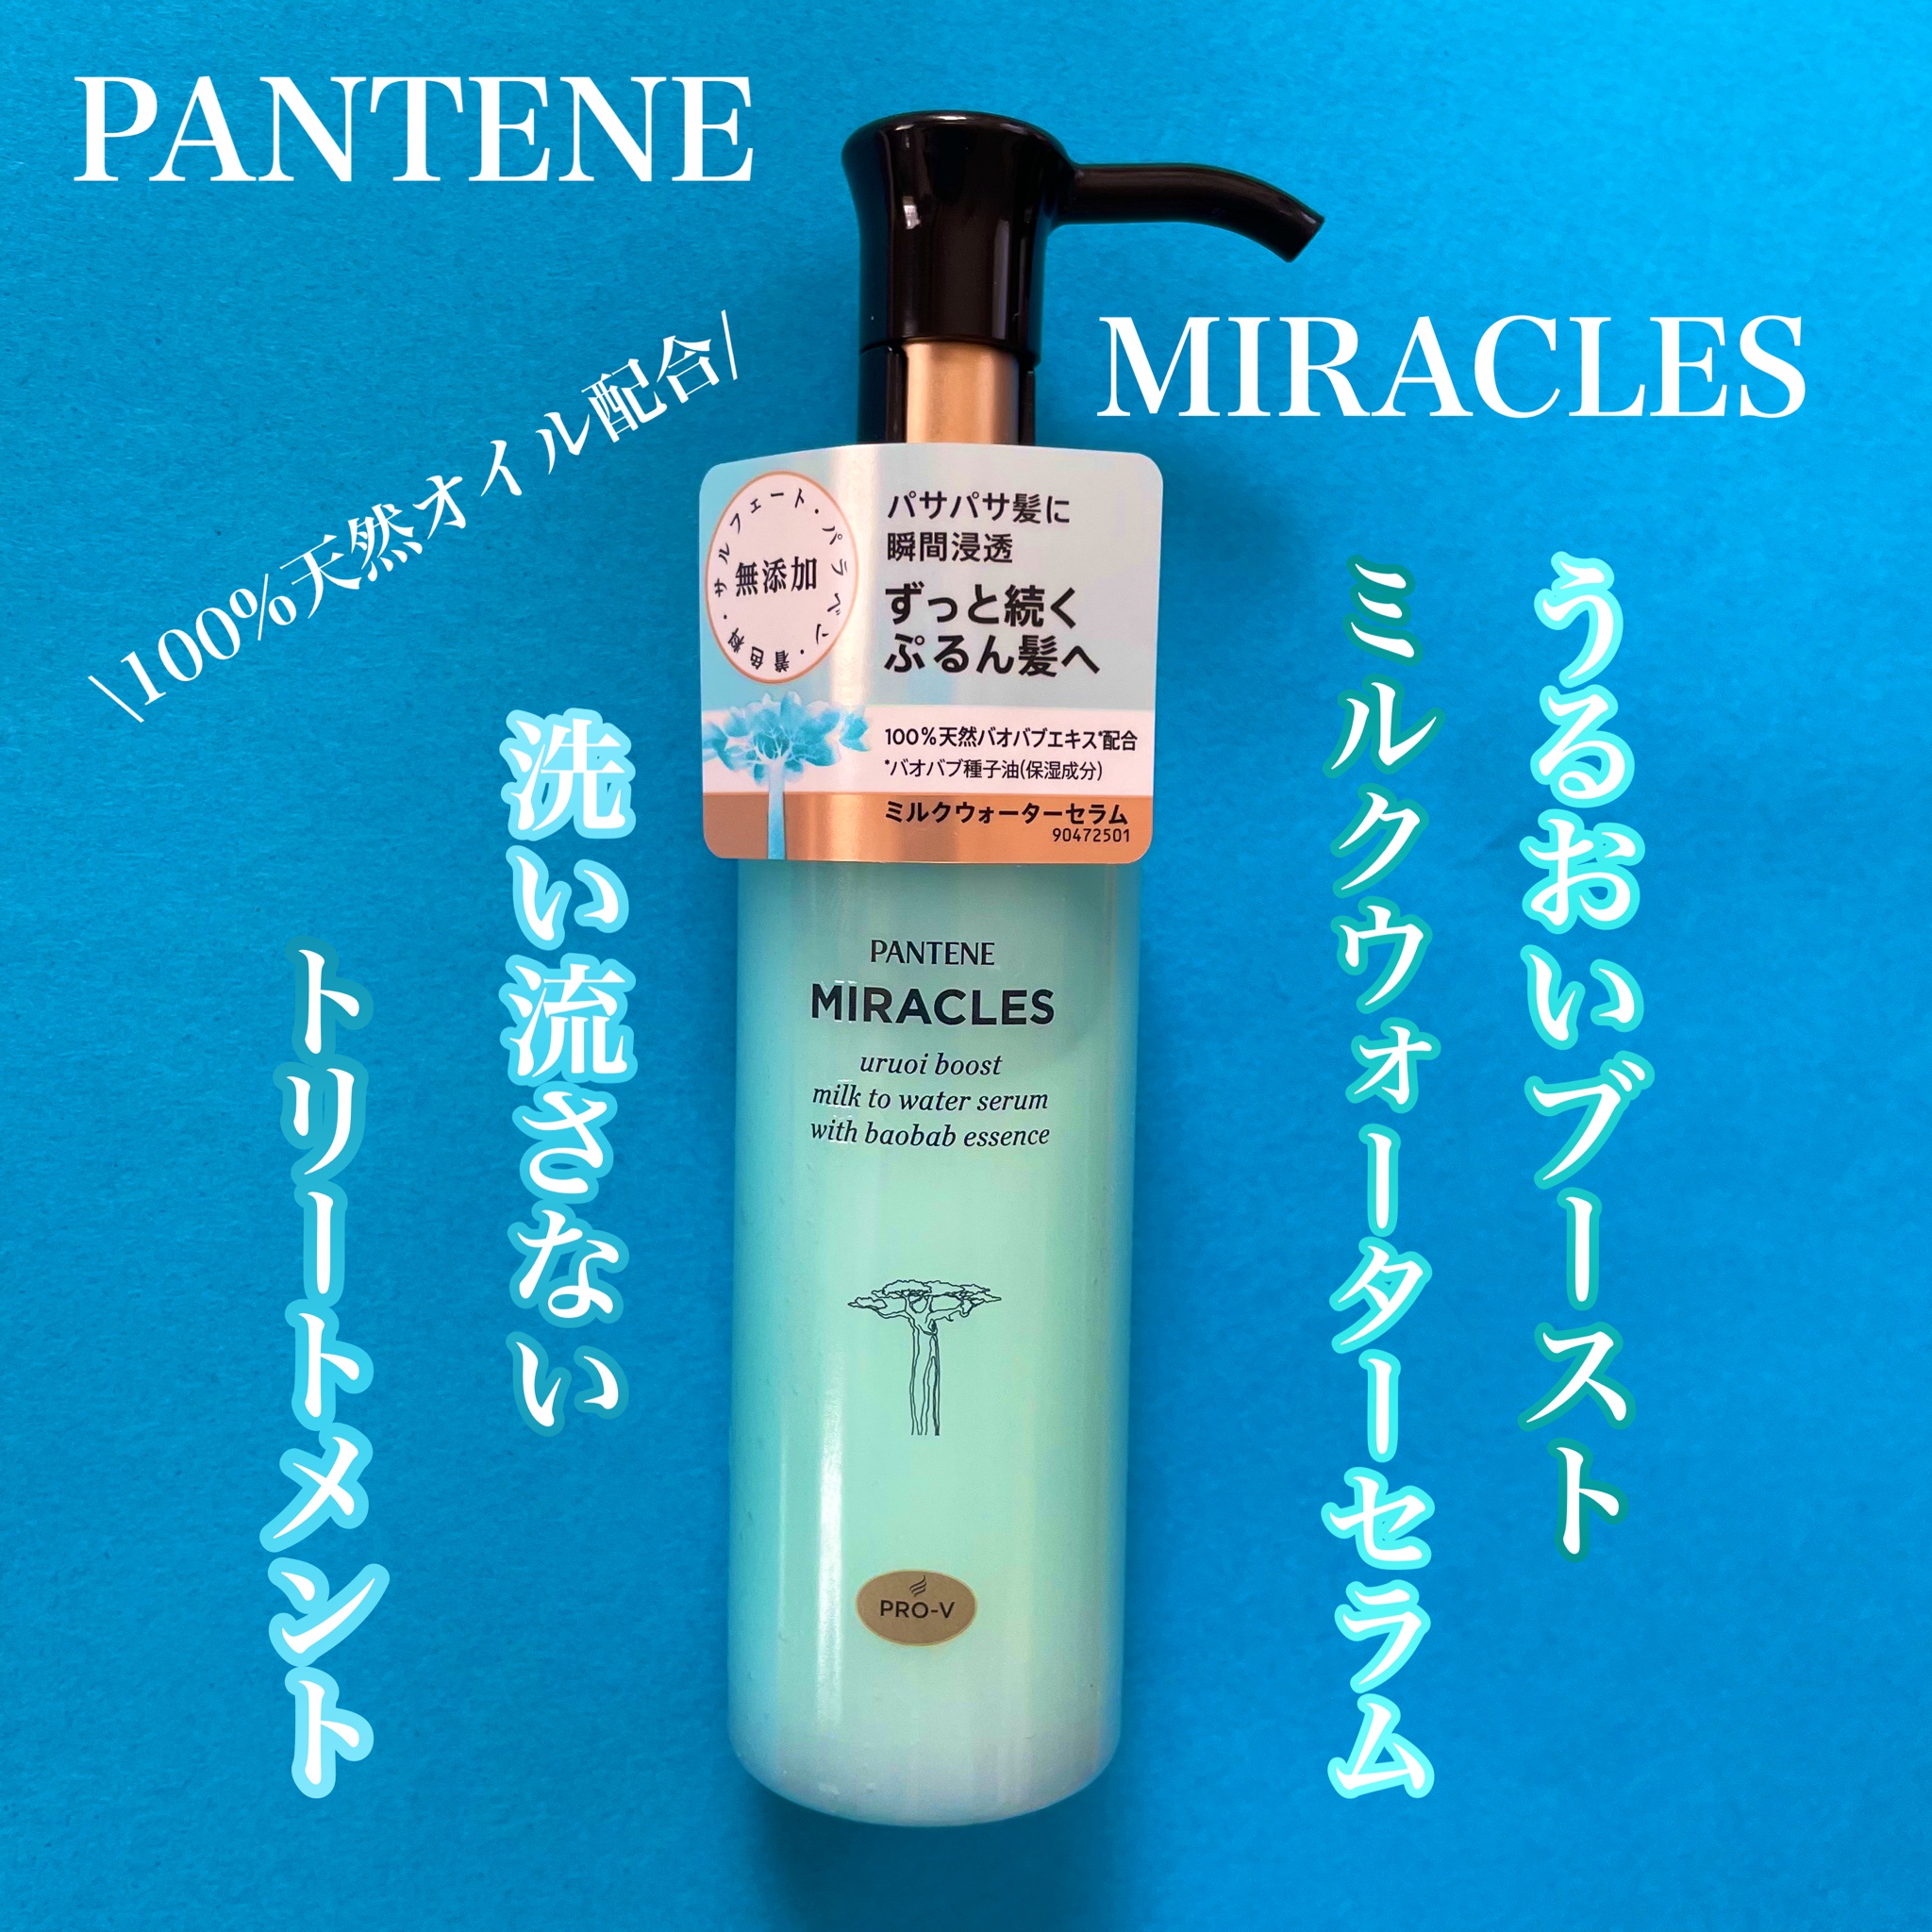 Creme de Tratamento Intensivo Manteiga de Murumuru e D-pantenol 220g -  SofthairPerfumaria Seiki - Loja de Cosméticos e Produtos de Beleza